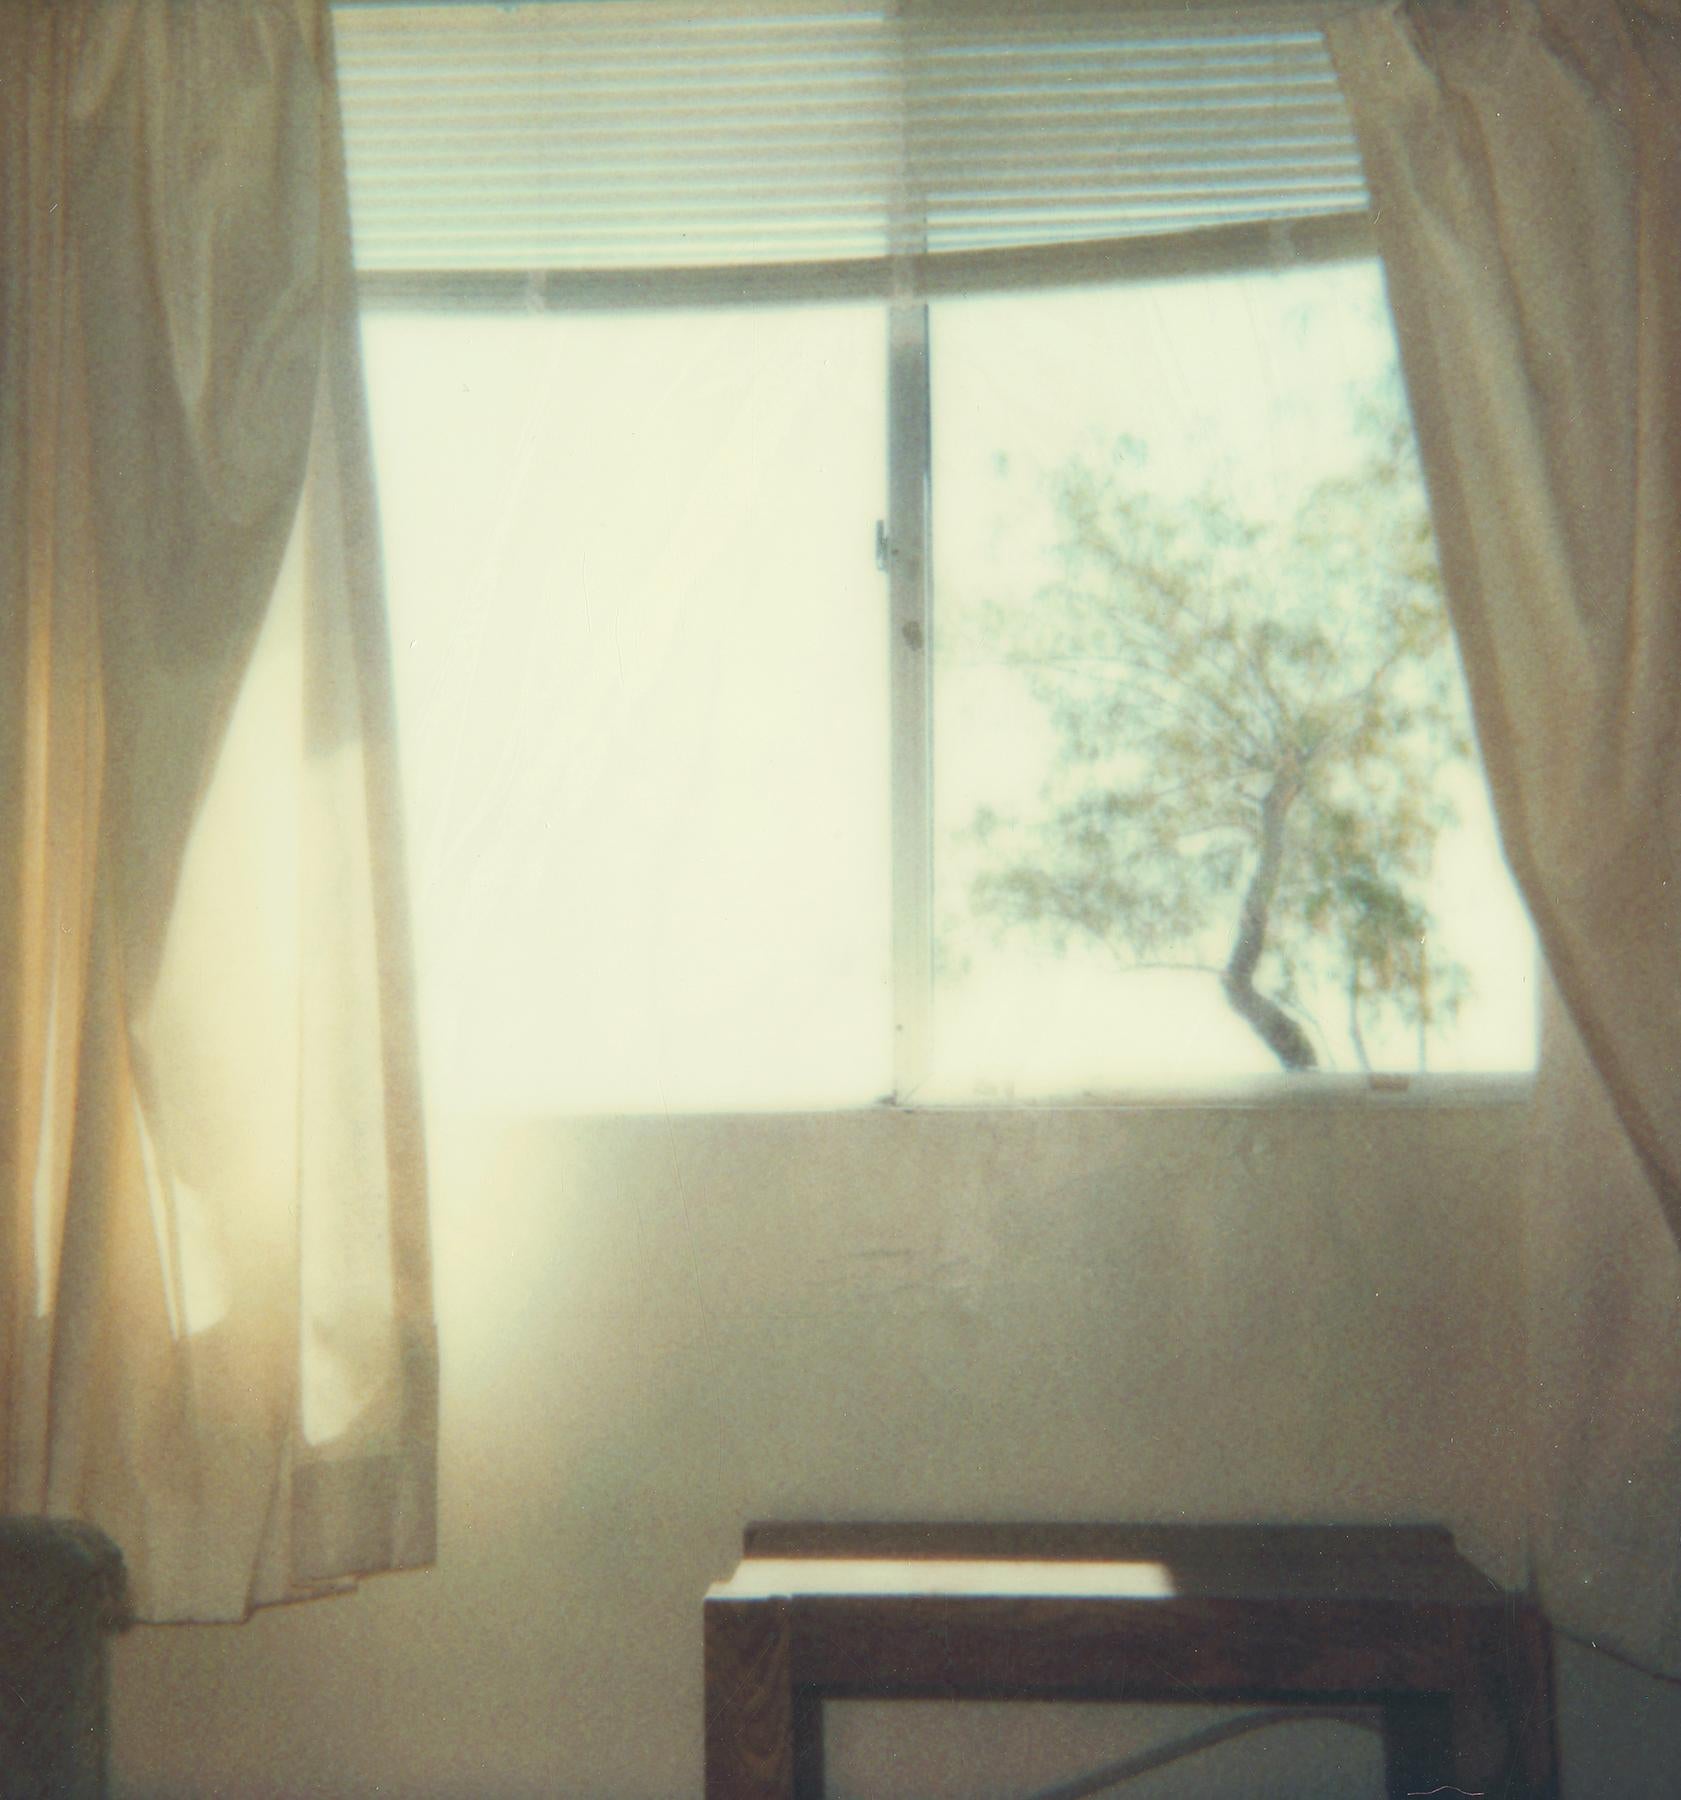 Living Room (29 Palms, CA) - Polaroid, Contemporary - Photograph by Stefanie Schneider